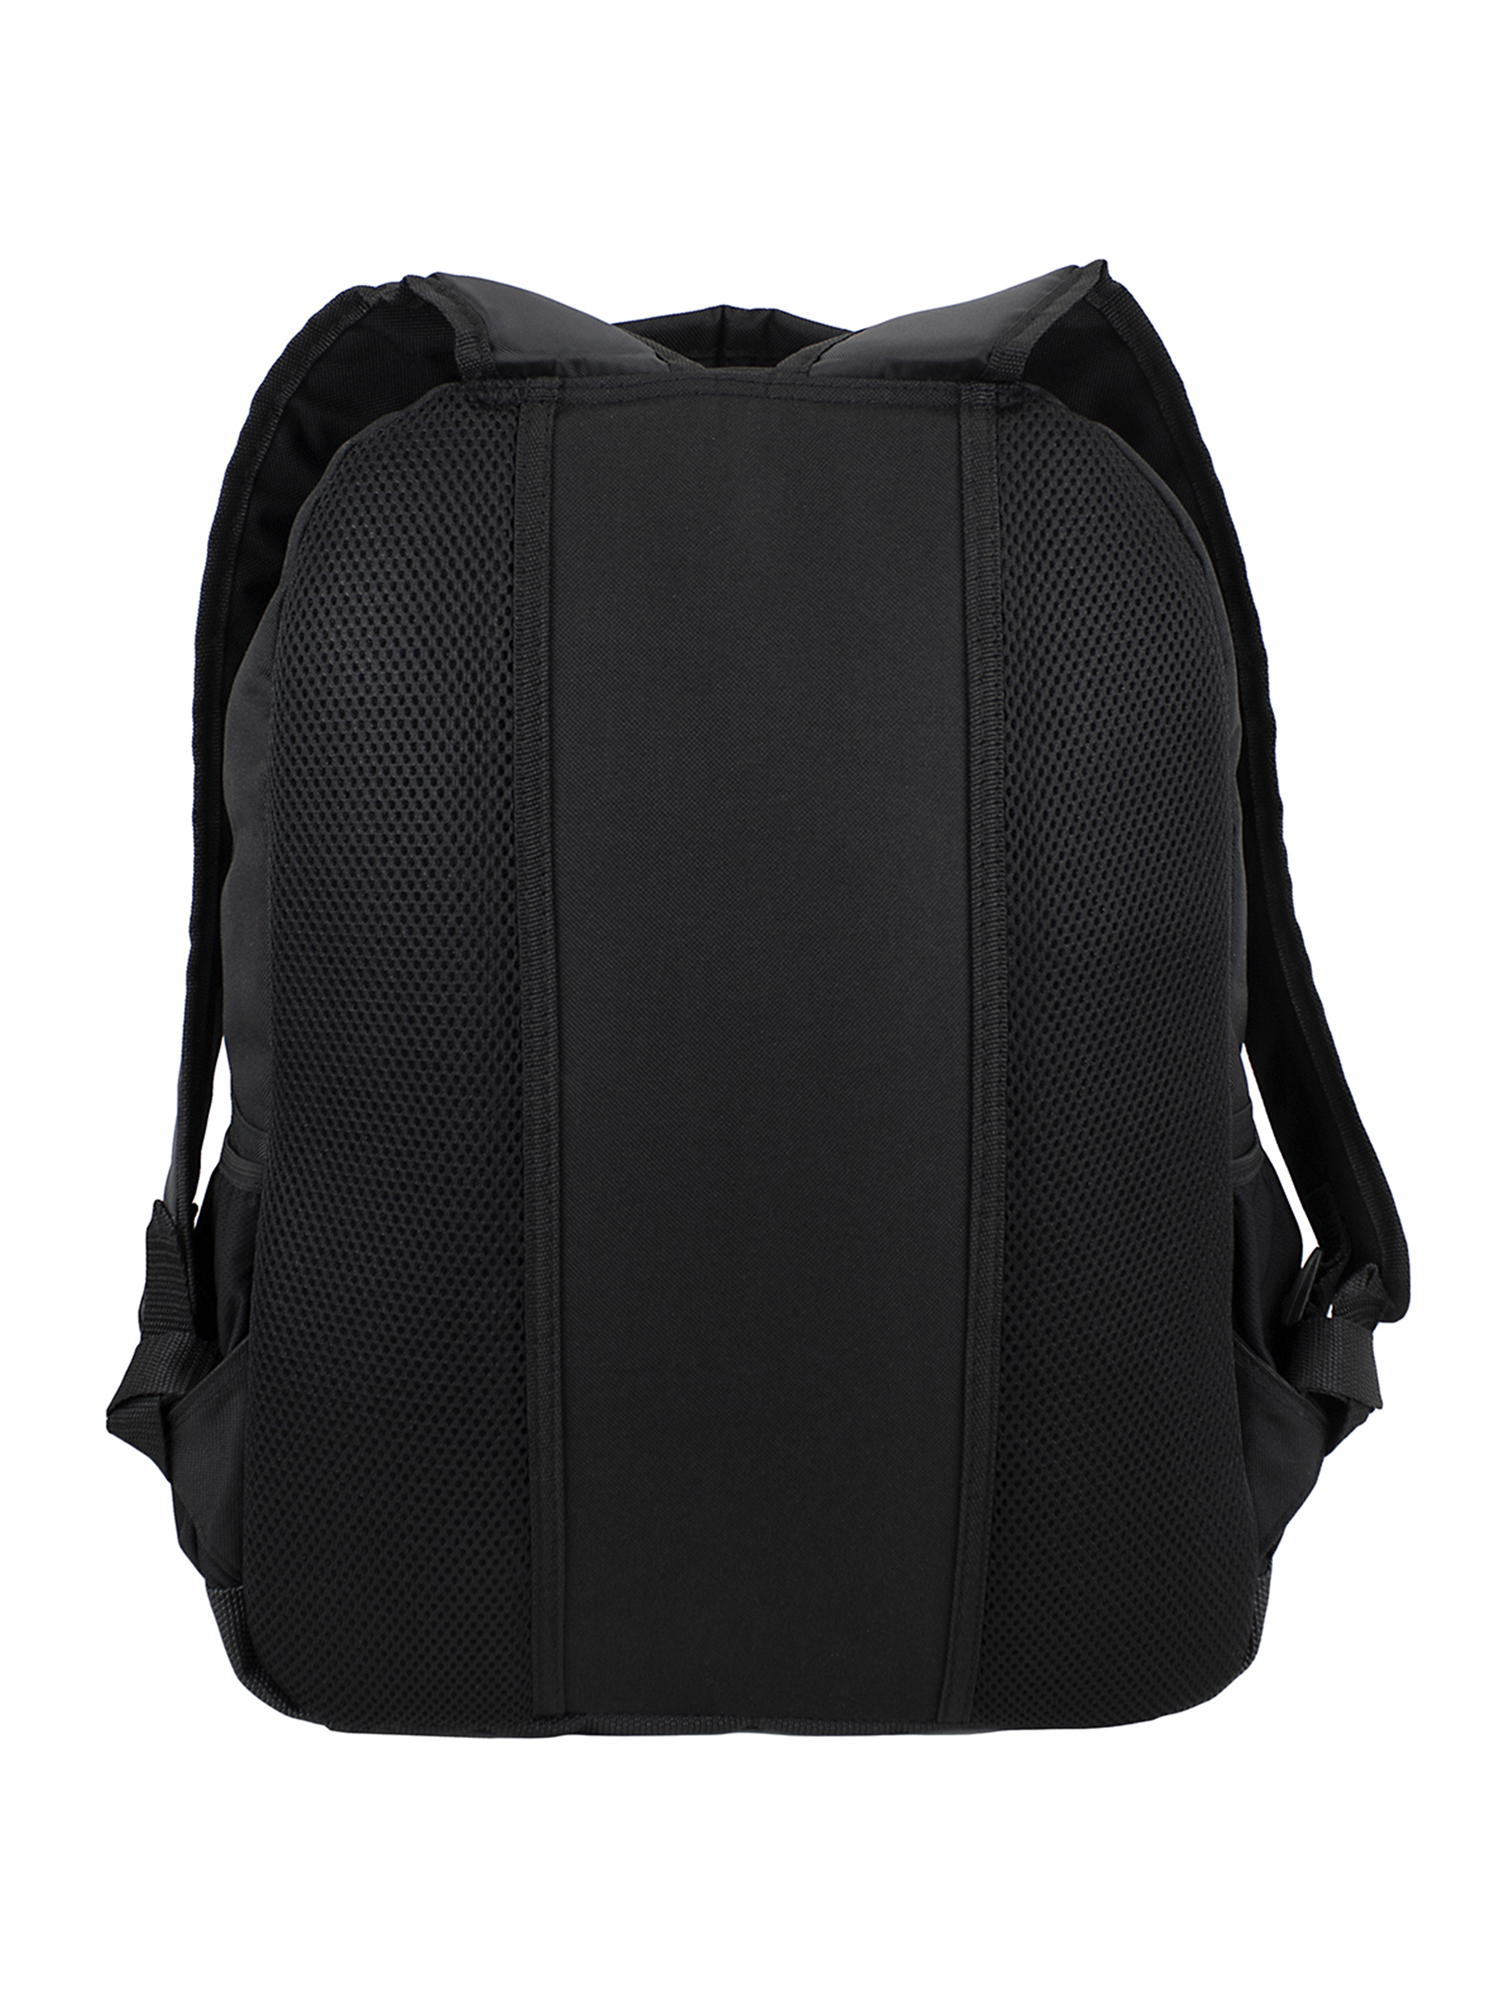 Eastsport Unisex Classic Backpack with Bonus Drawstring Bag Pink - image 4 of 6